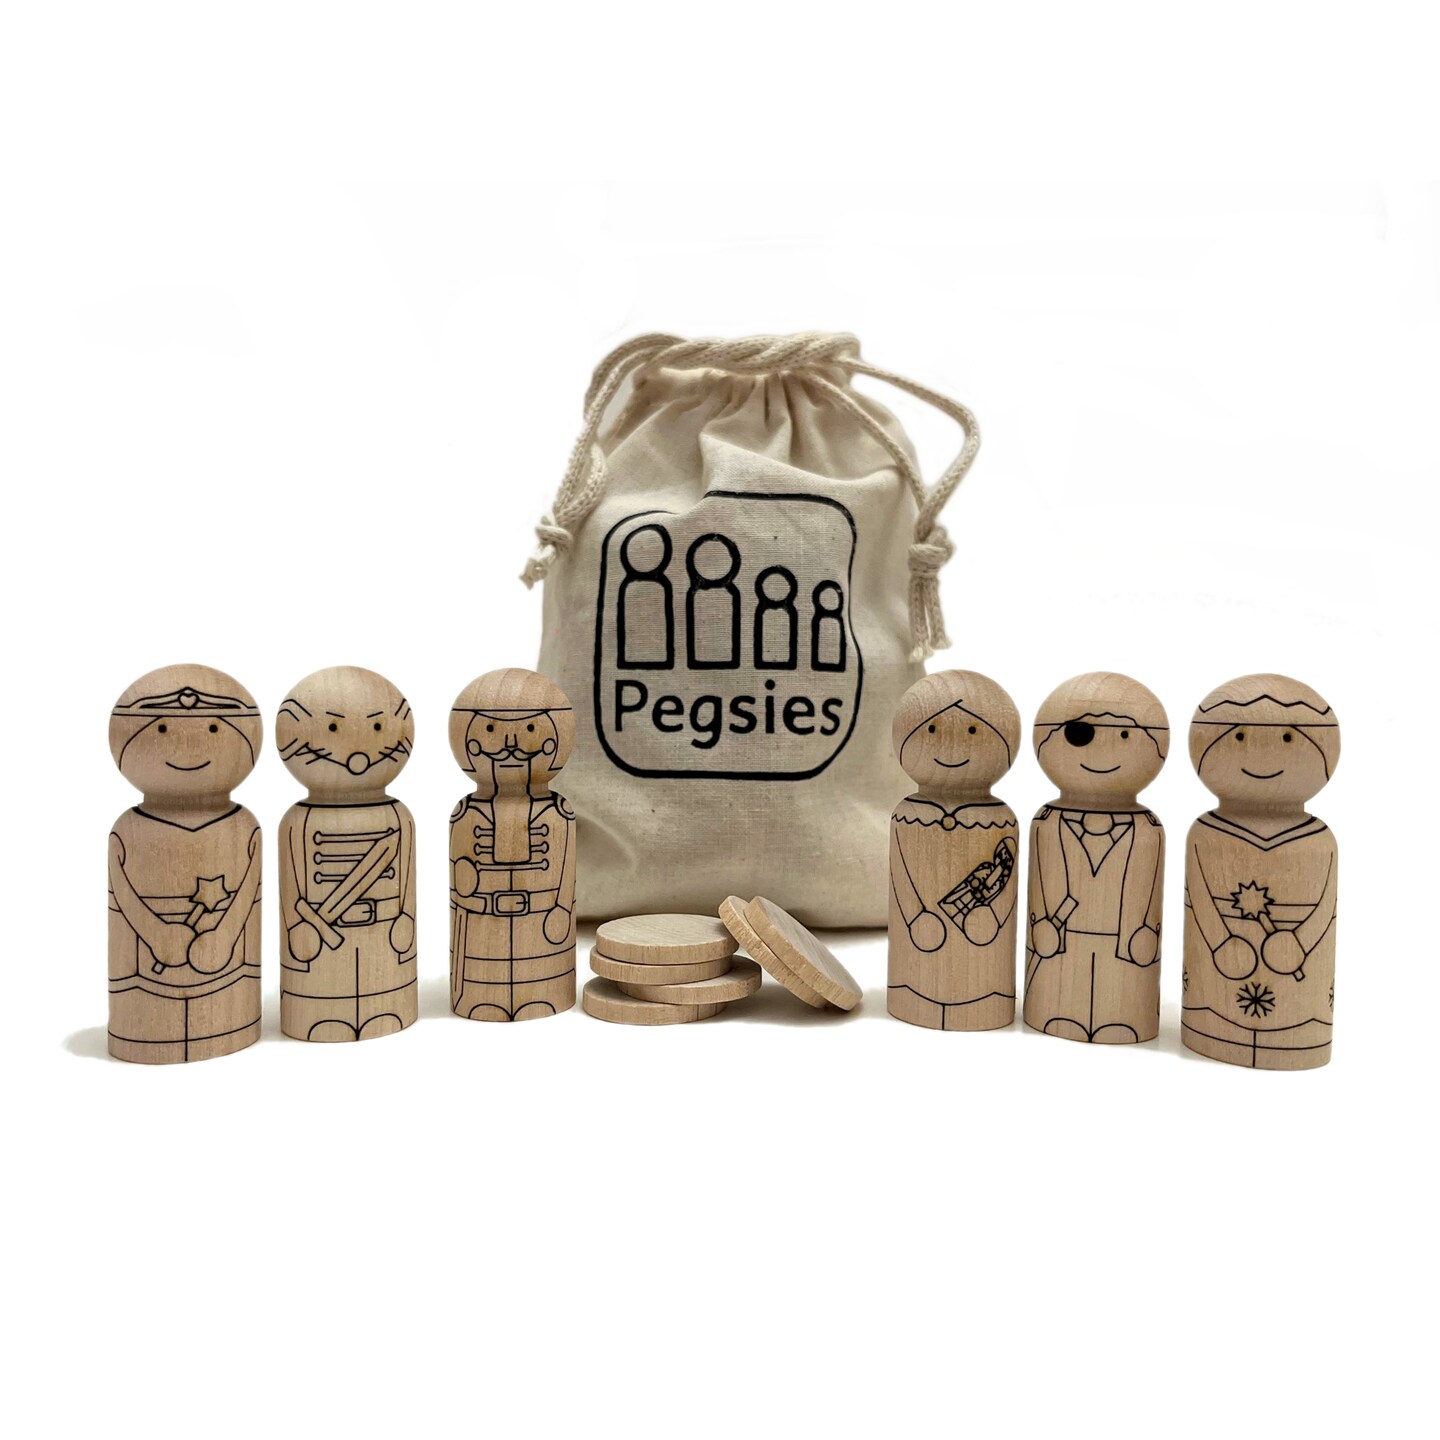 Nutcracker Peg Doll Set by Pegsies&#x2122;